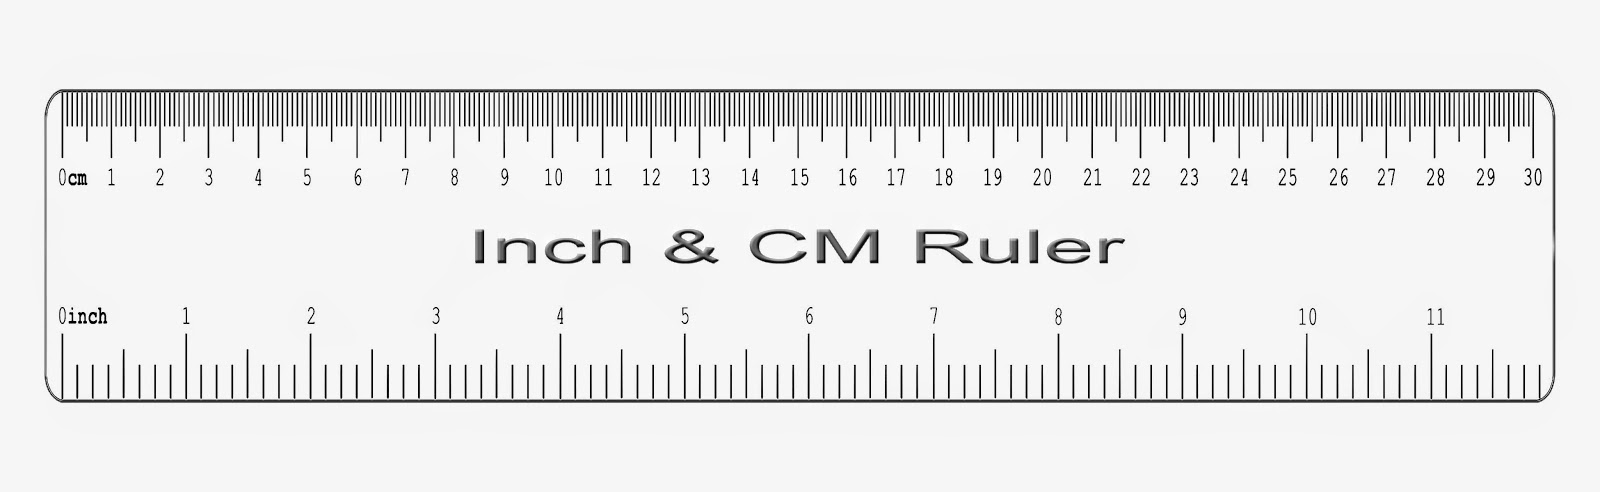 Free Metric Ruler Cliparts Download Free Metric Ruler Cliparts Png